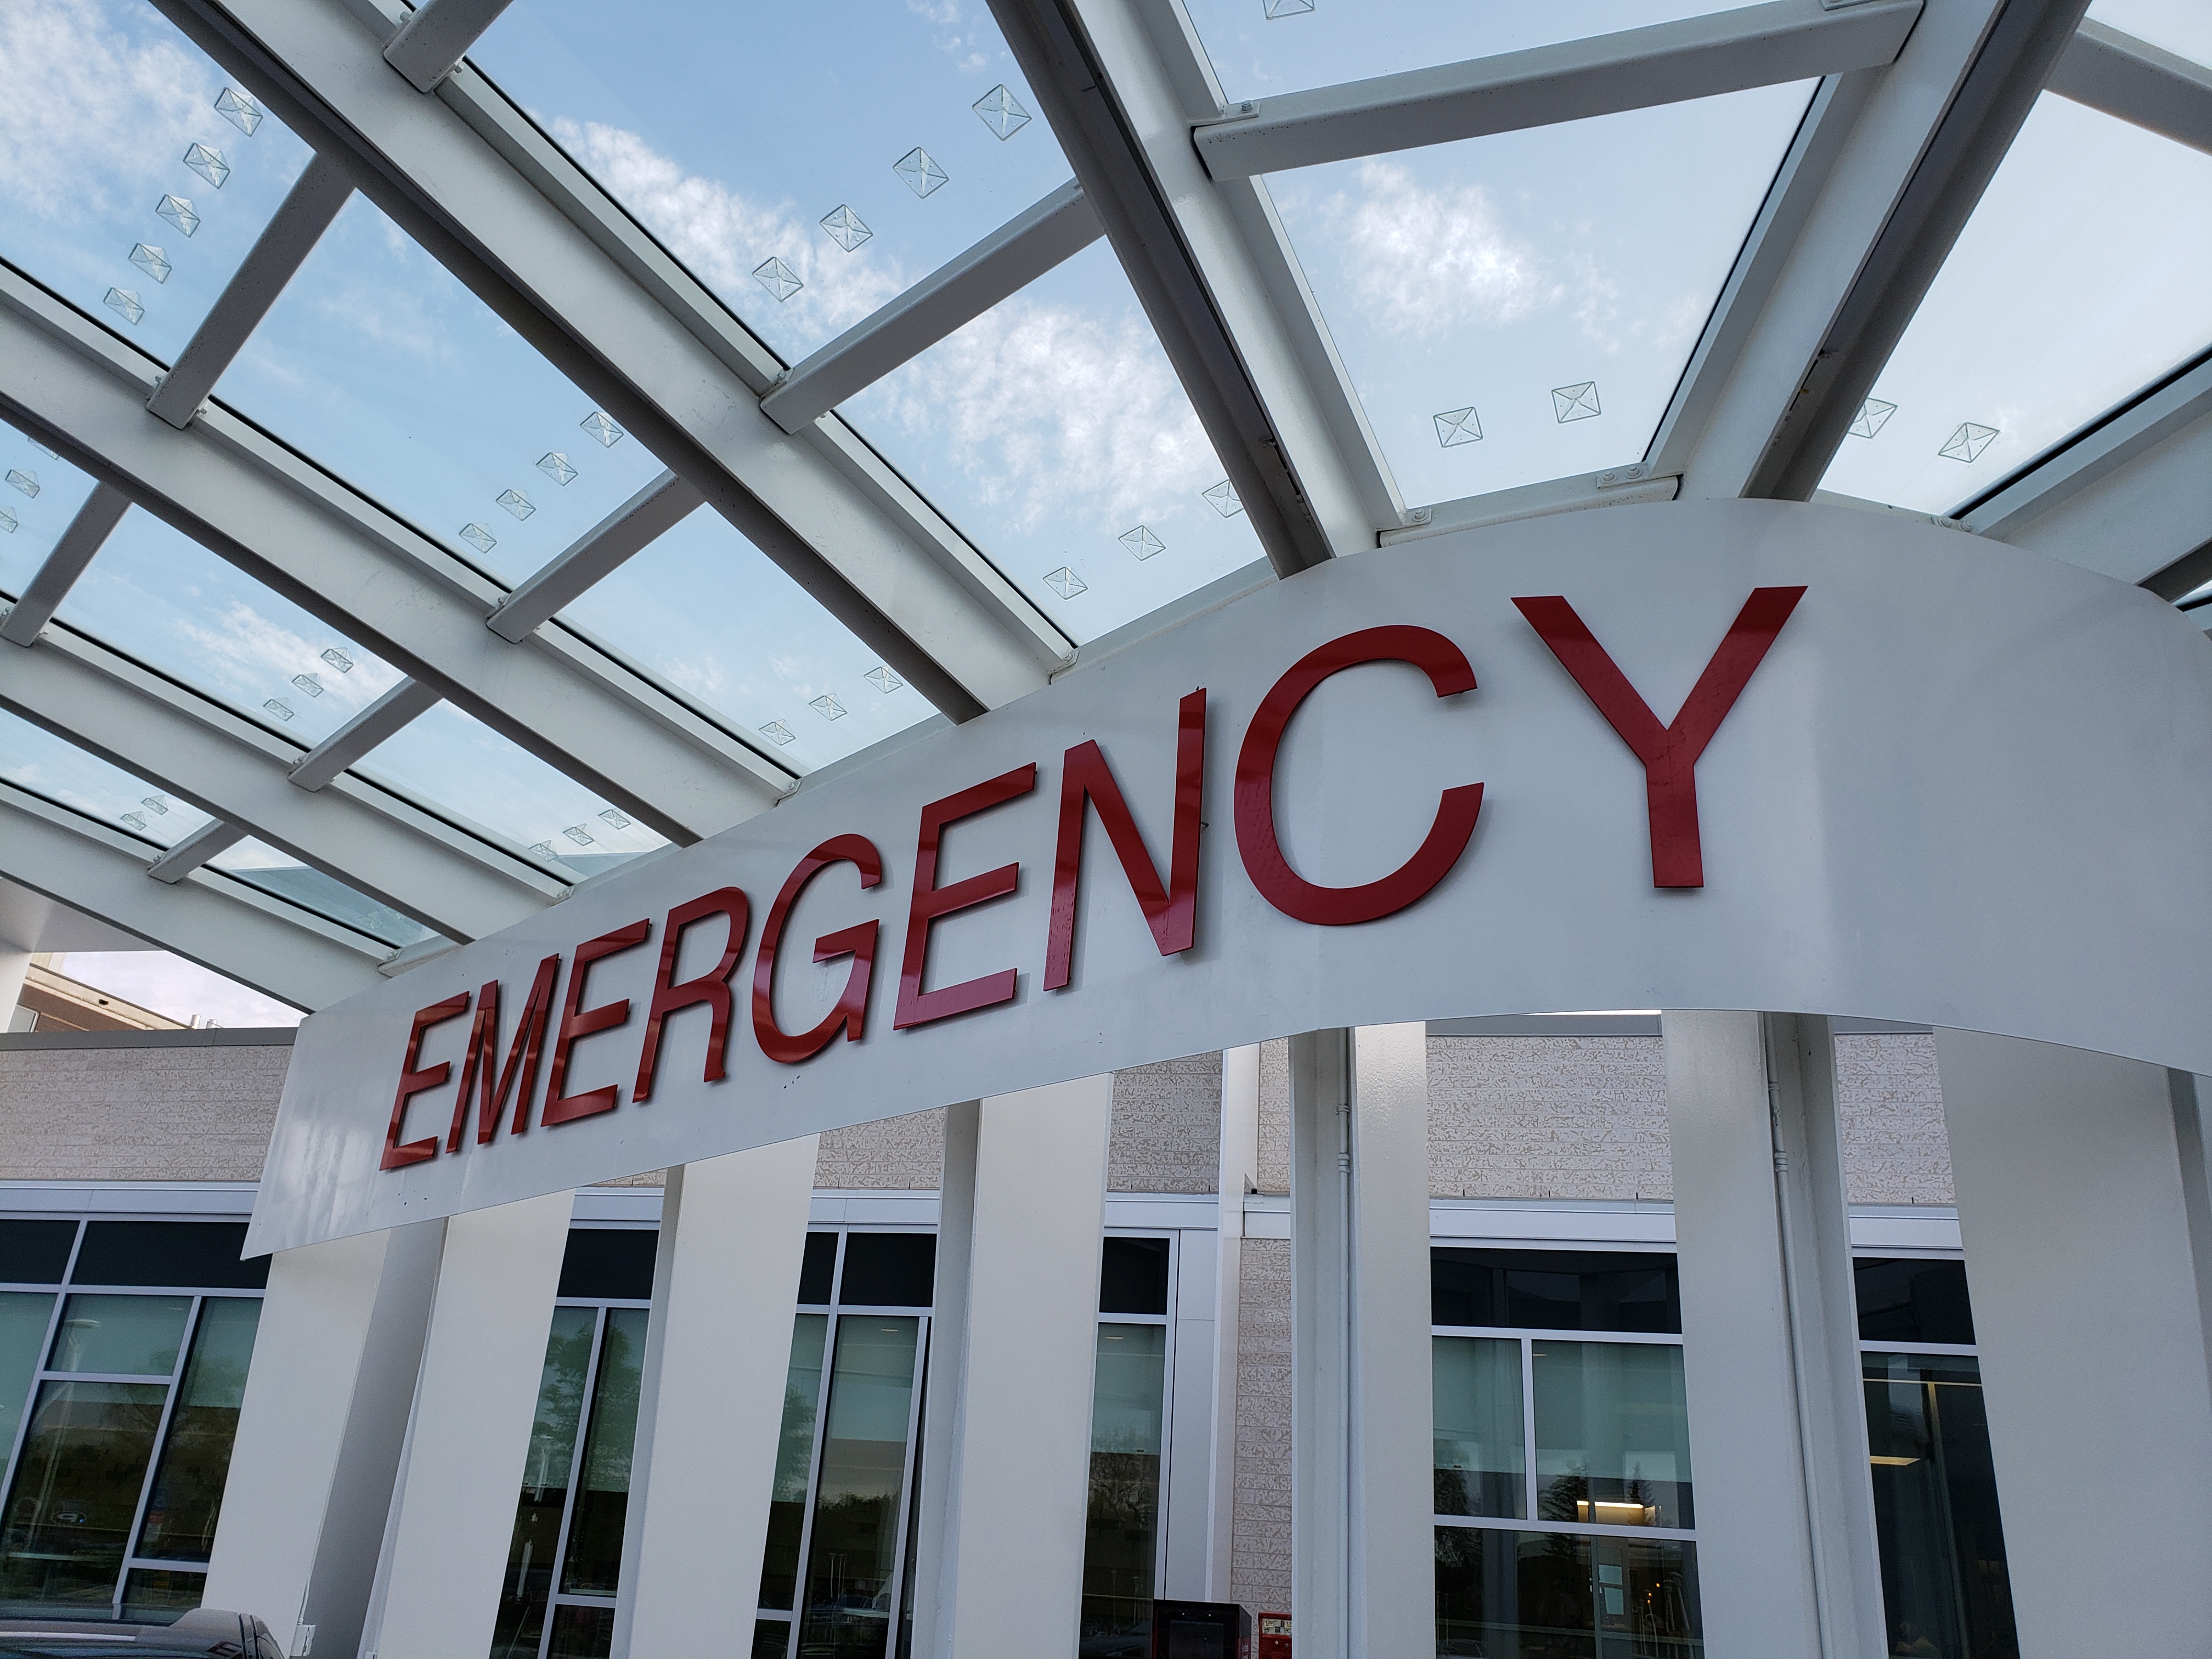 Patient death in Grace Hospital under investigation by Winnipeg Regional Health Authority